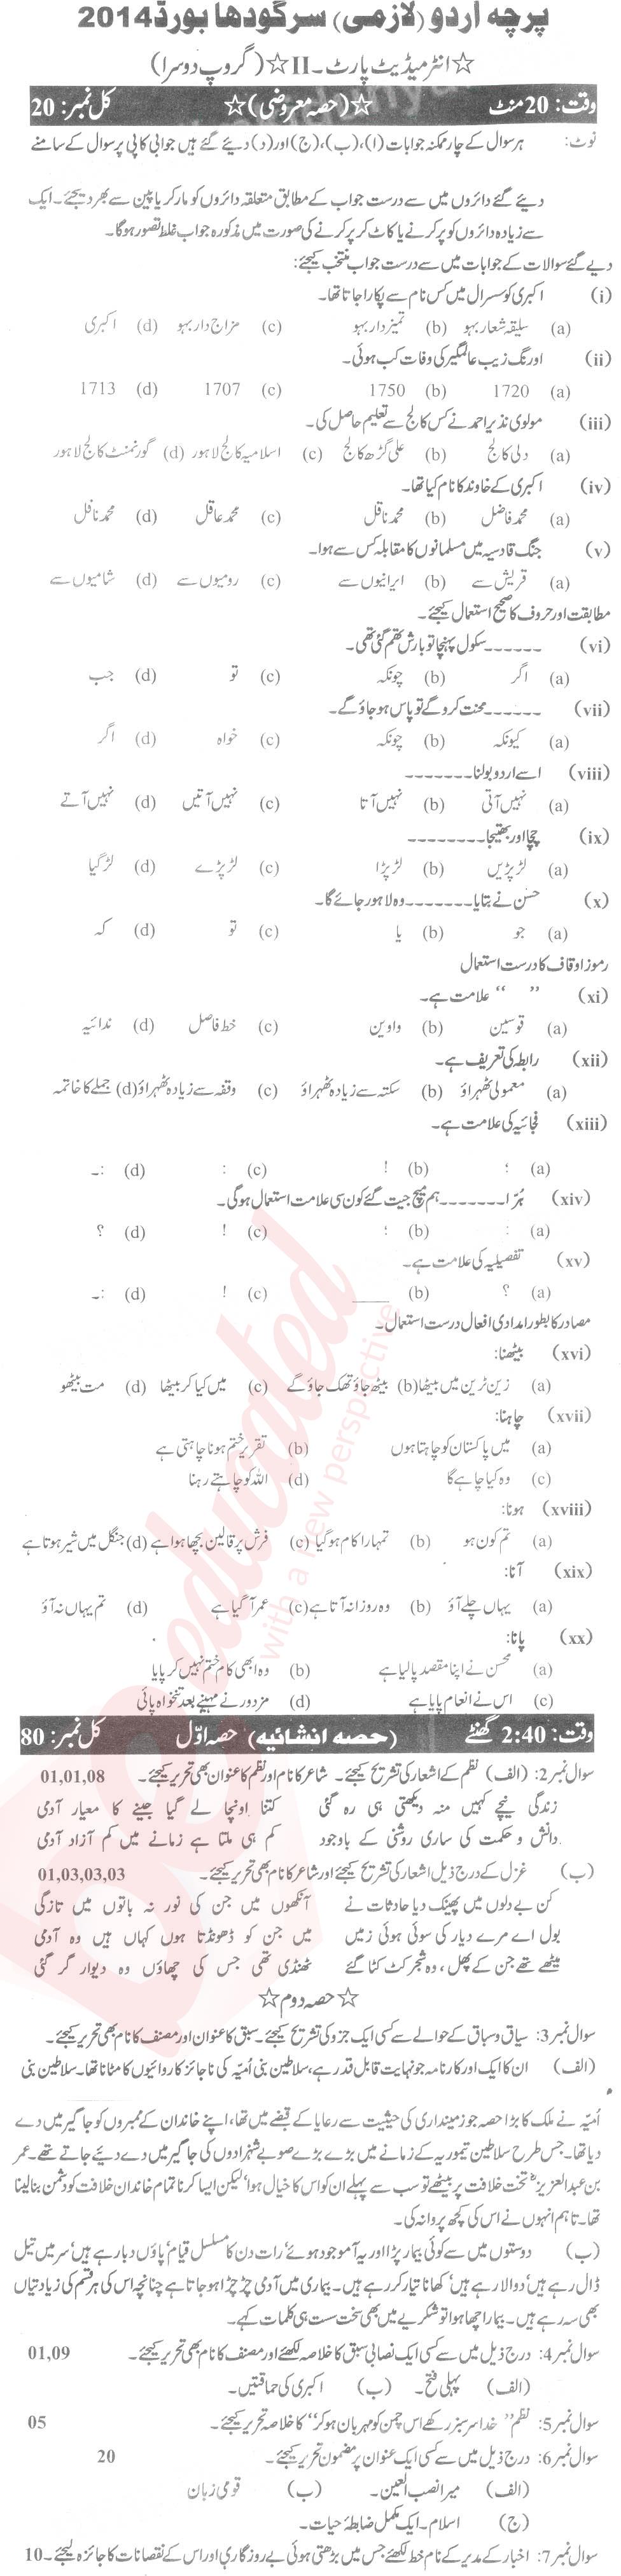 Urdu 12th class Past Paper Group 2 BISE Sargodha 2014